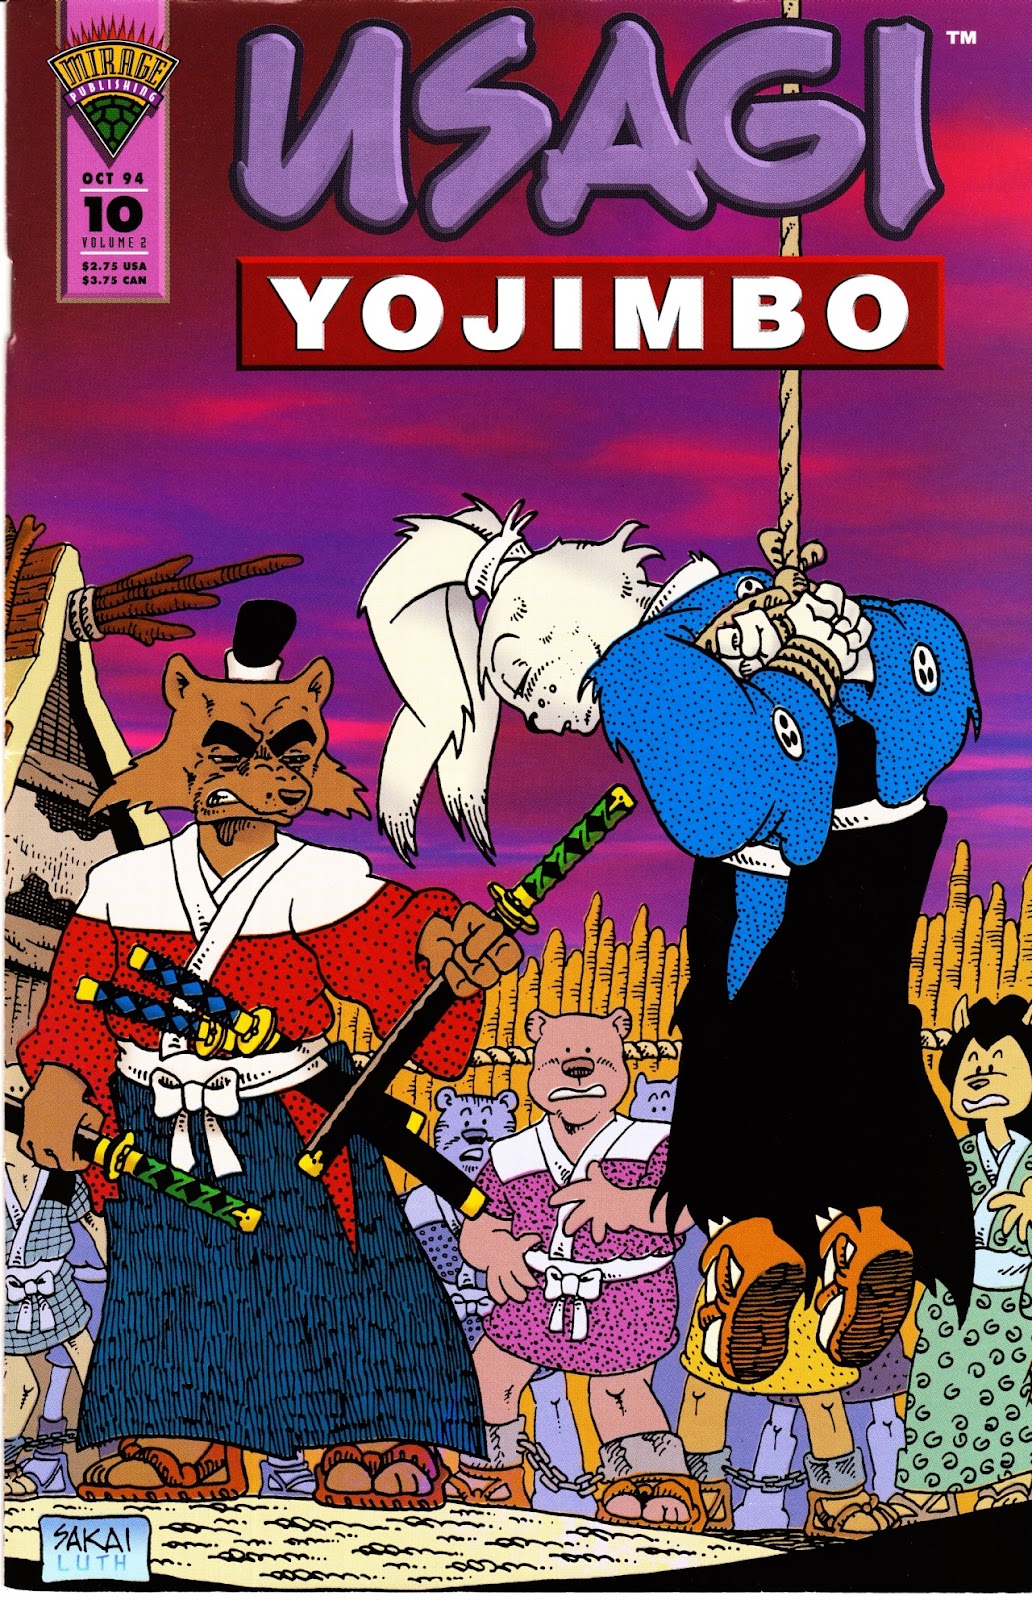 Usagi Yojimbo (1993) issue 10 - Page 1